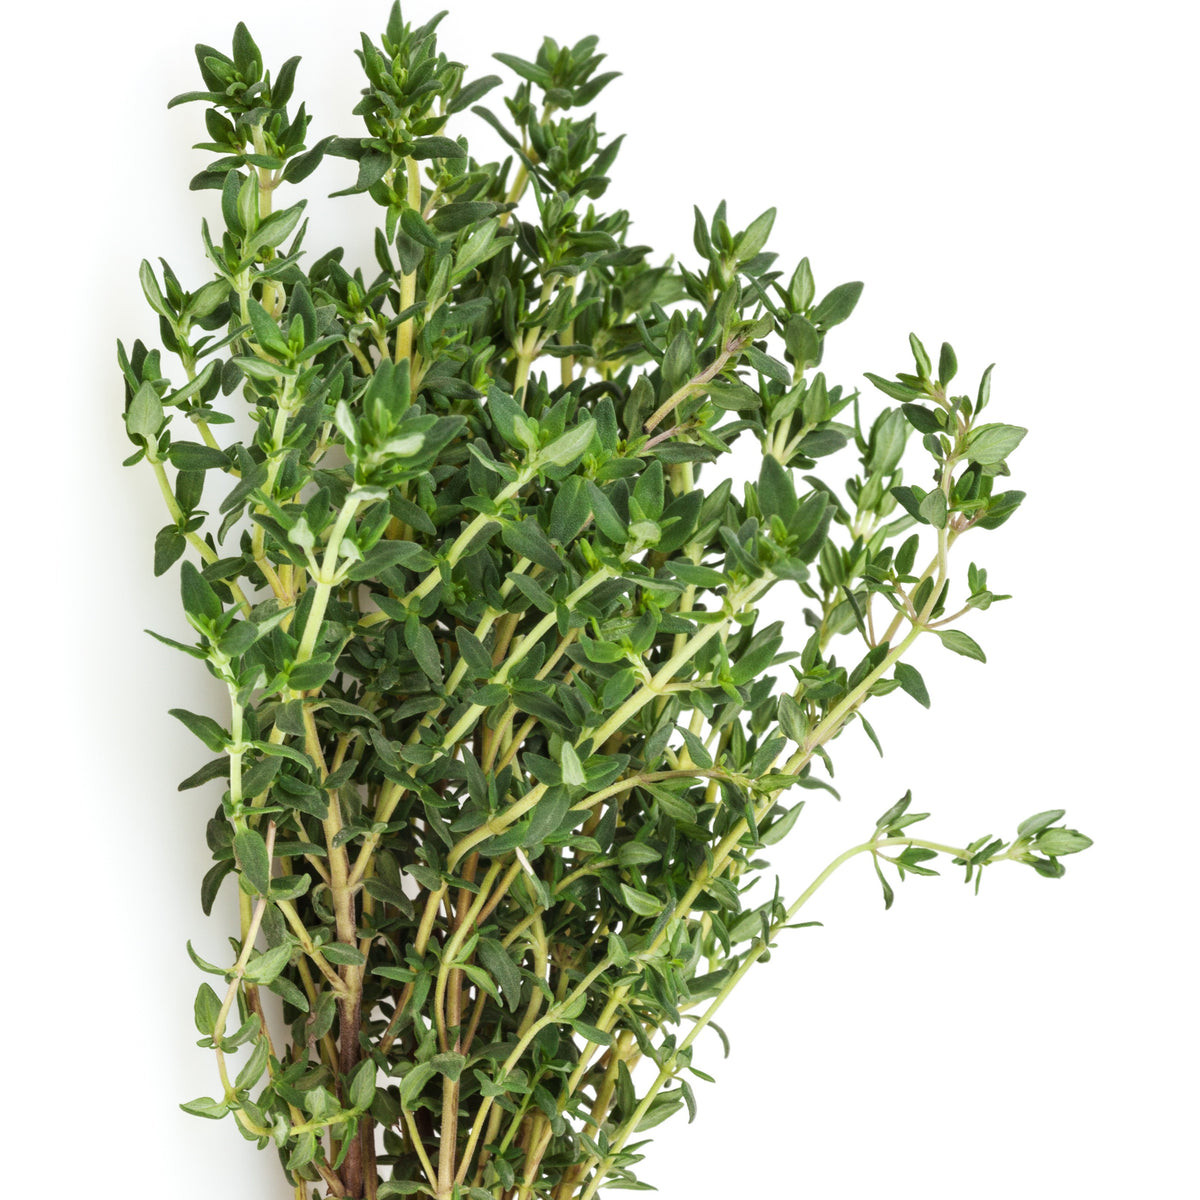 Plant de Thym commun - Thymus vulgaris - Potager